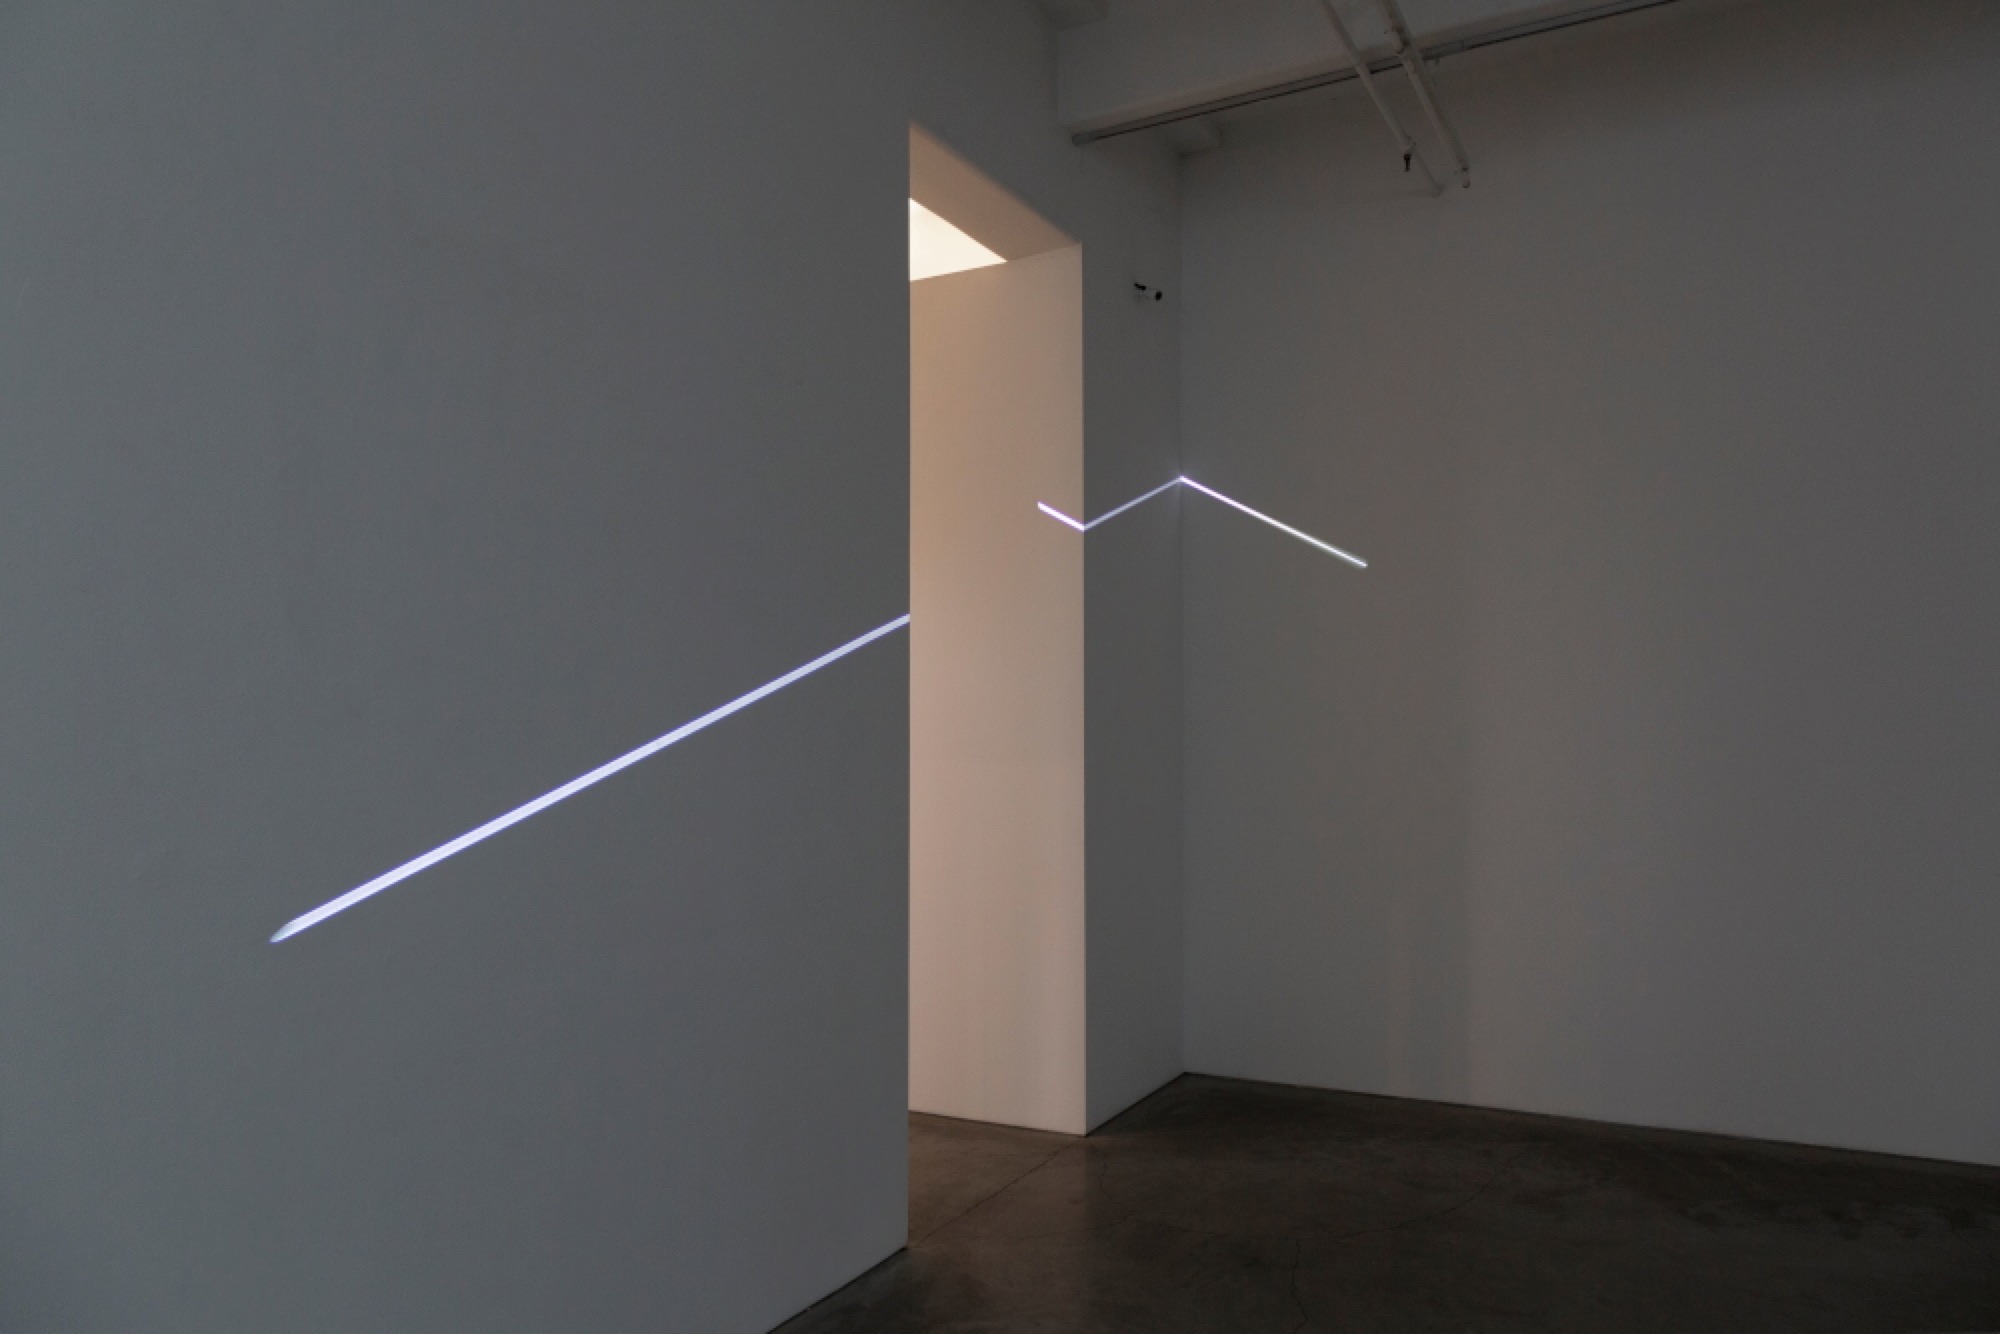 DANIEL VON STURMER, <em>Electric Light (facts/figures/anna schwartz gallery upstairs)</em>, 2019, Animated light installation, Dimensions variable. Image courtesy the artist and Anna Schwartz Gallery.